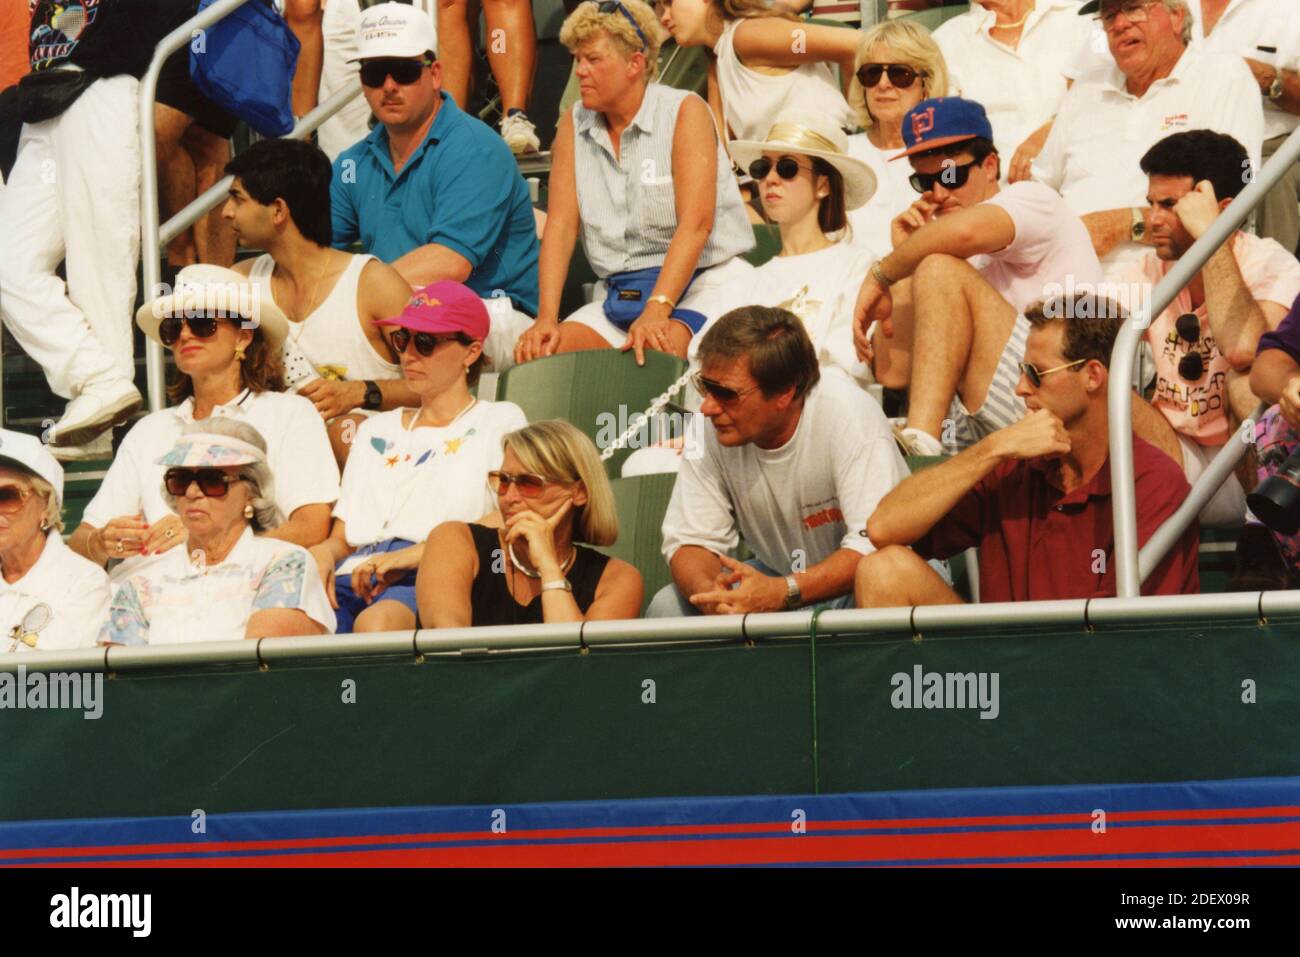 Peter and Heidi Graf, parents of German tennis player Steffi watching a match, 1994 Stock Photo